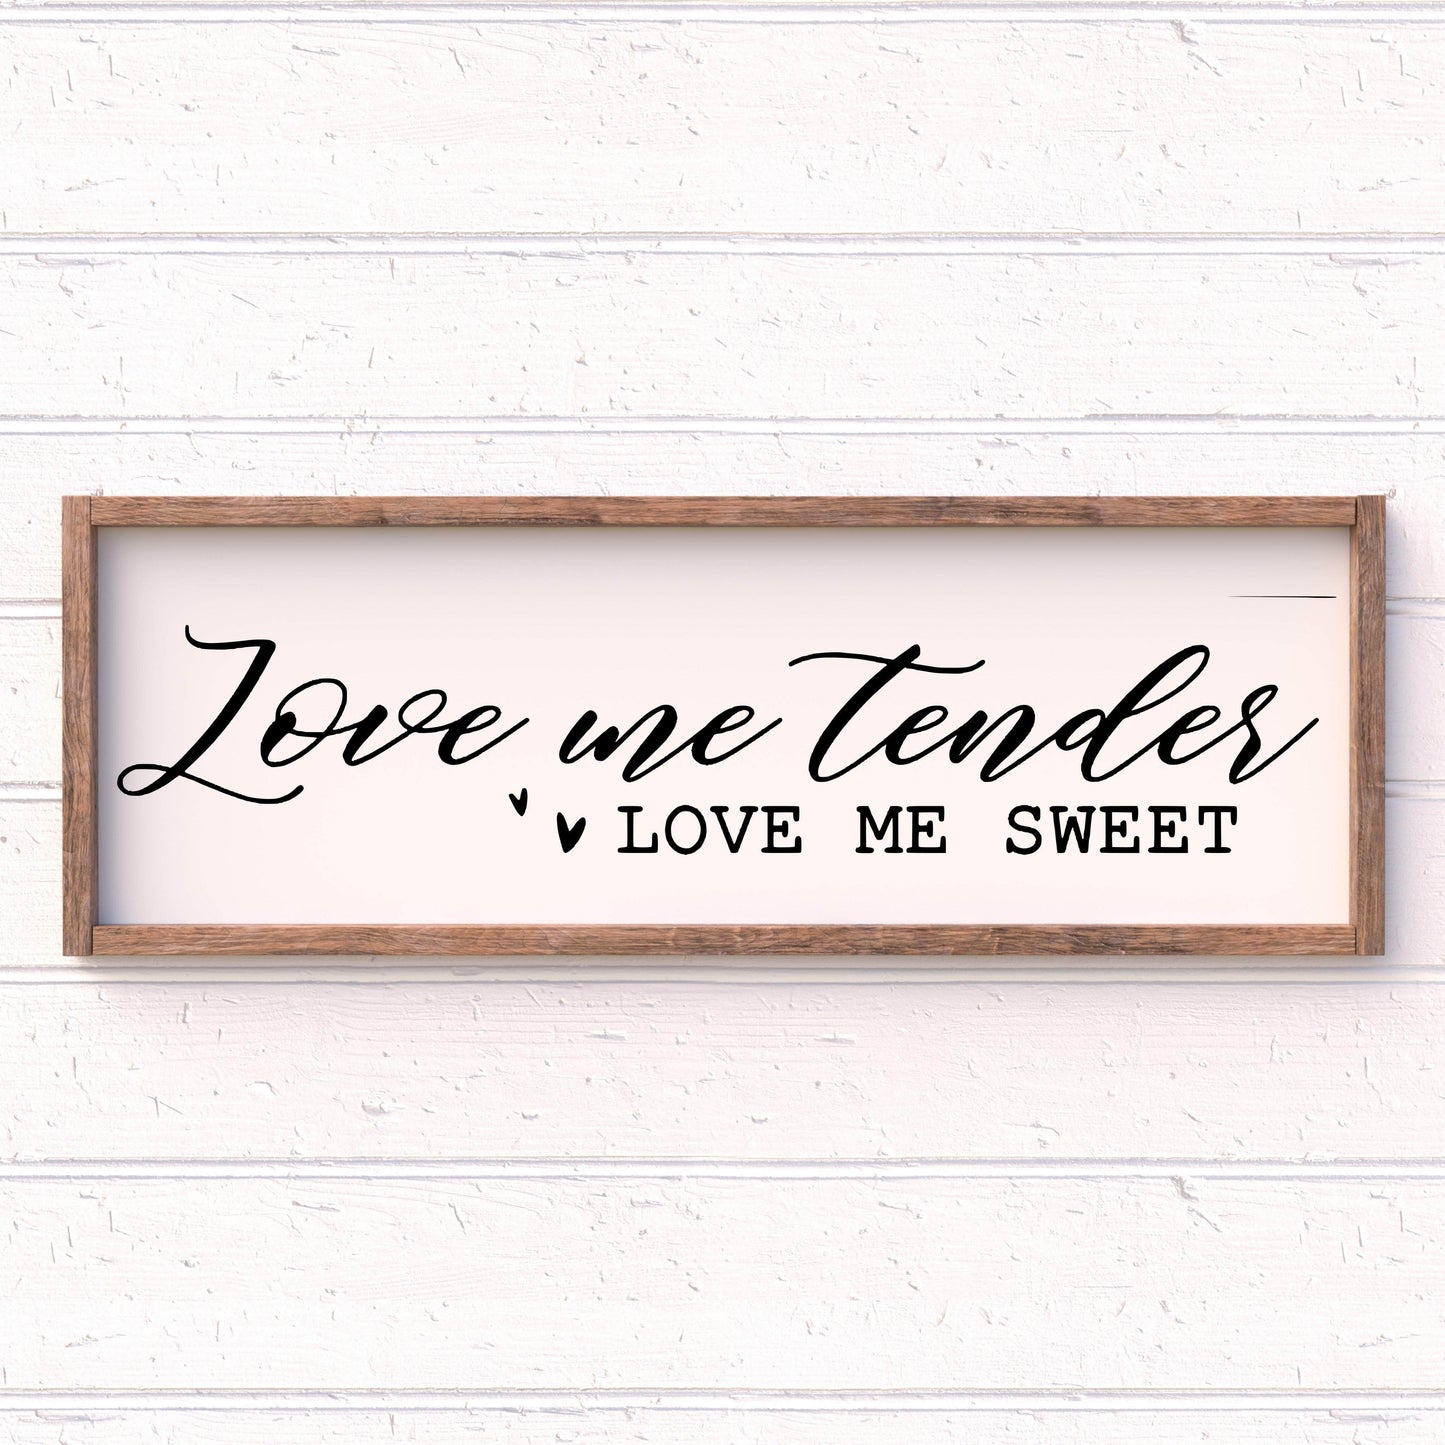 Love me Tender, Love me Sweet framed wood sign, farmhouse sign, rustic decor, home decor